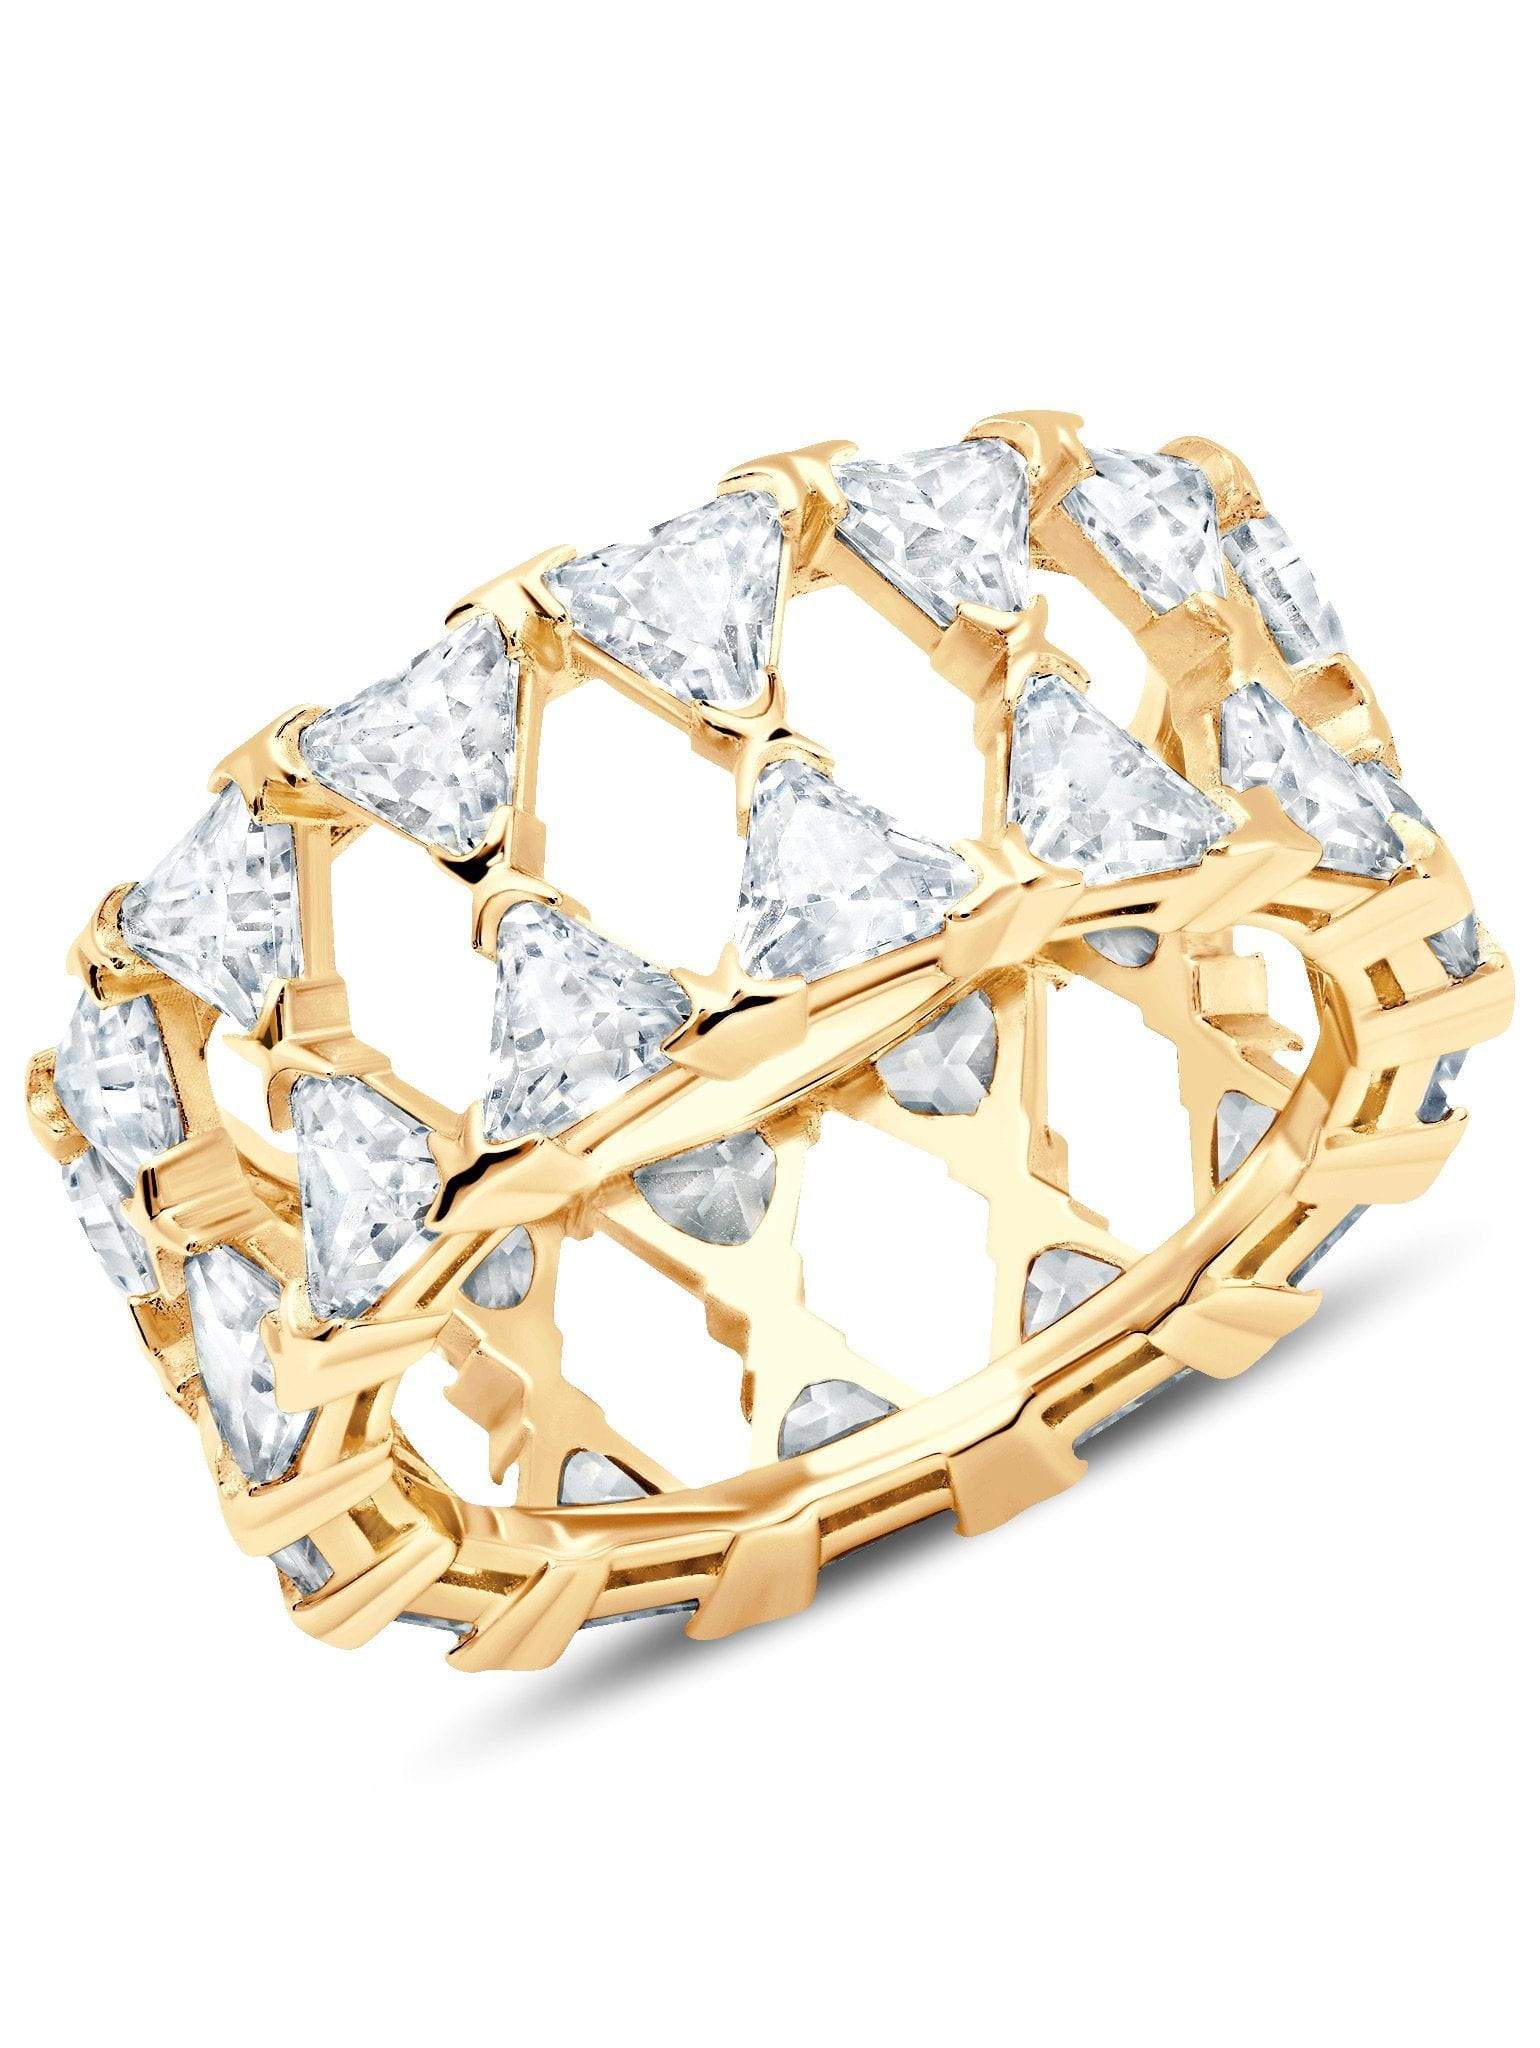 Crislu Jewelry Crislu Posh Trillion Cubic Zirconia Eternity Ring Finished in 18kt Gold Size 6